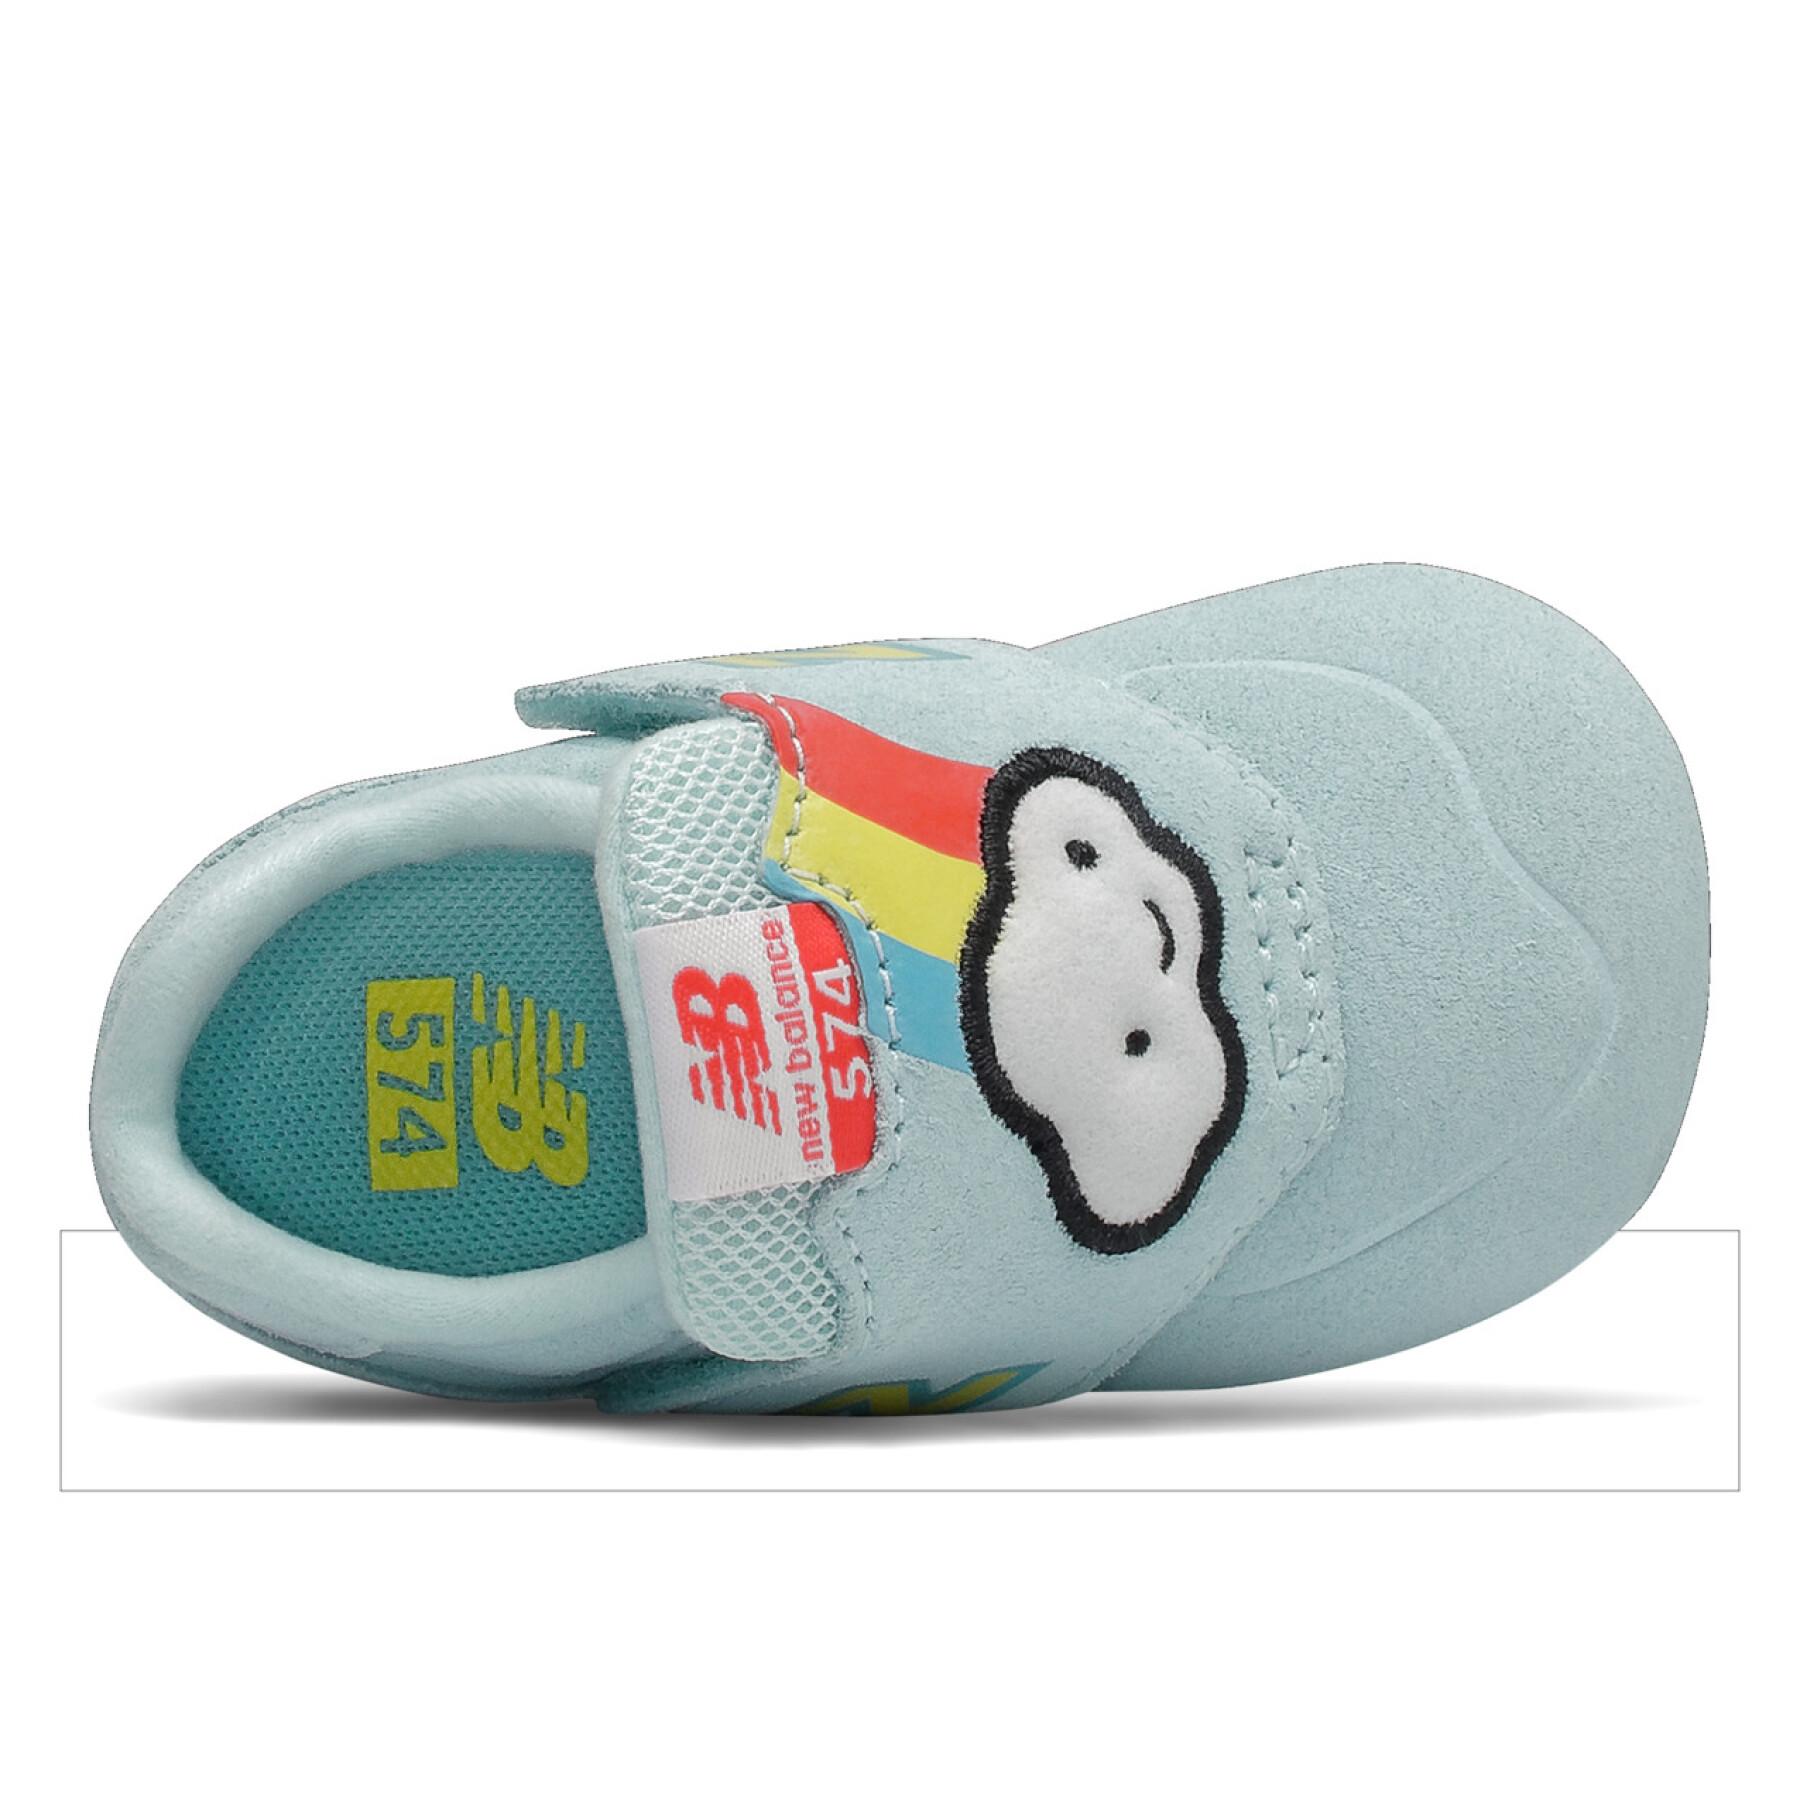 Baby shoes New Balance 574 crib